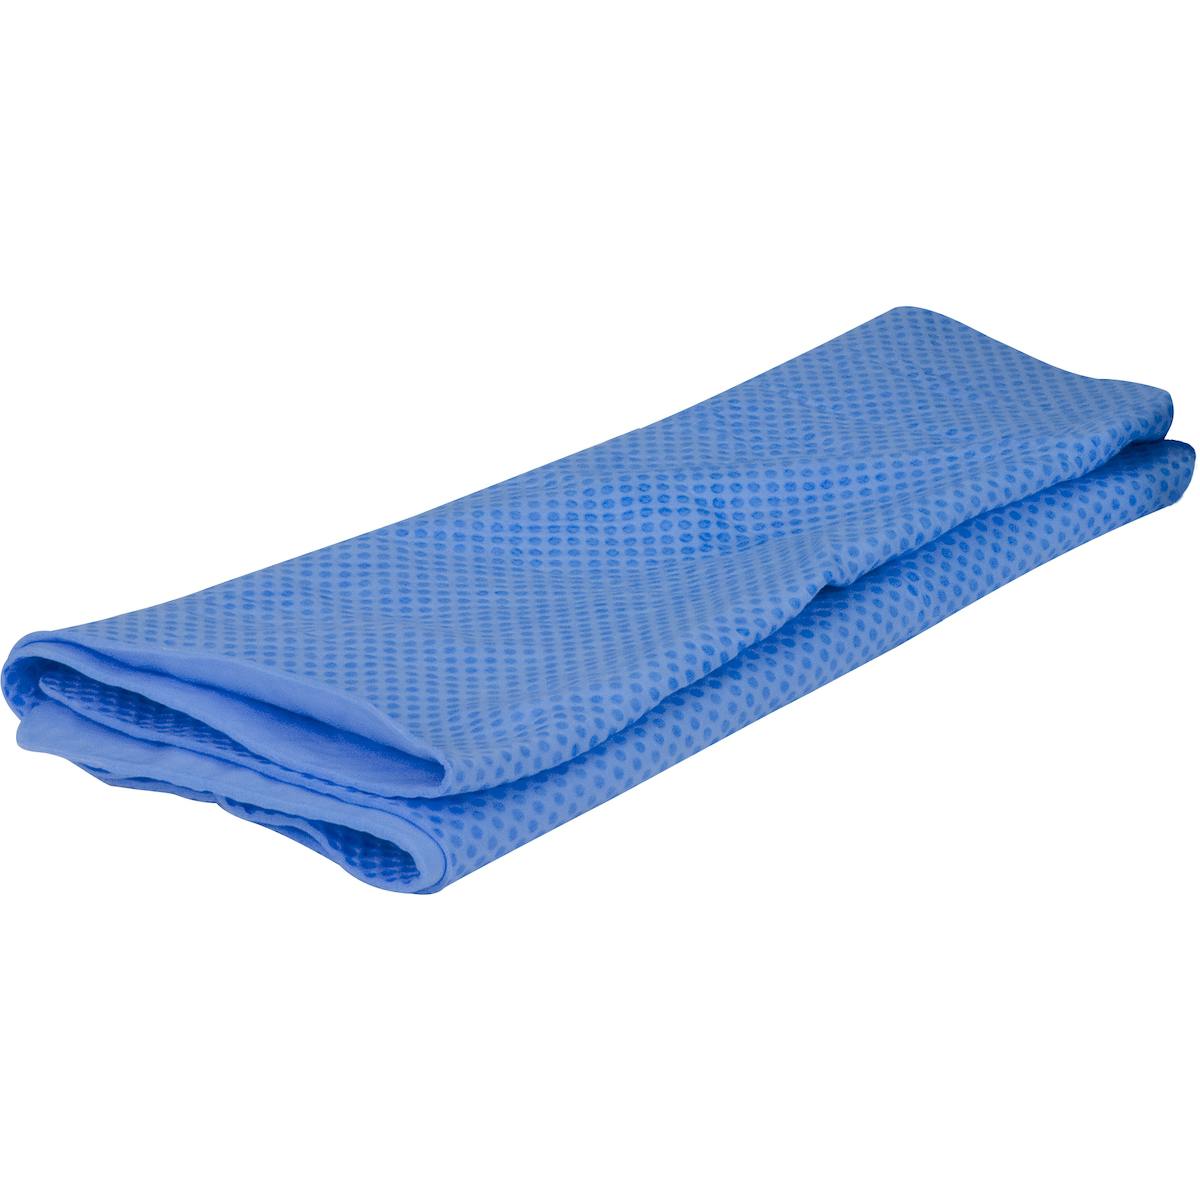 EZ-Cool Evaporative PVA Cooling Towel, Blue (396-602)_1